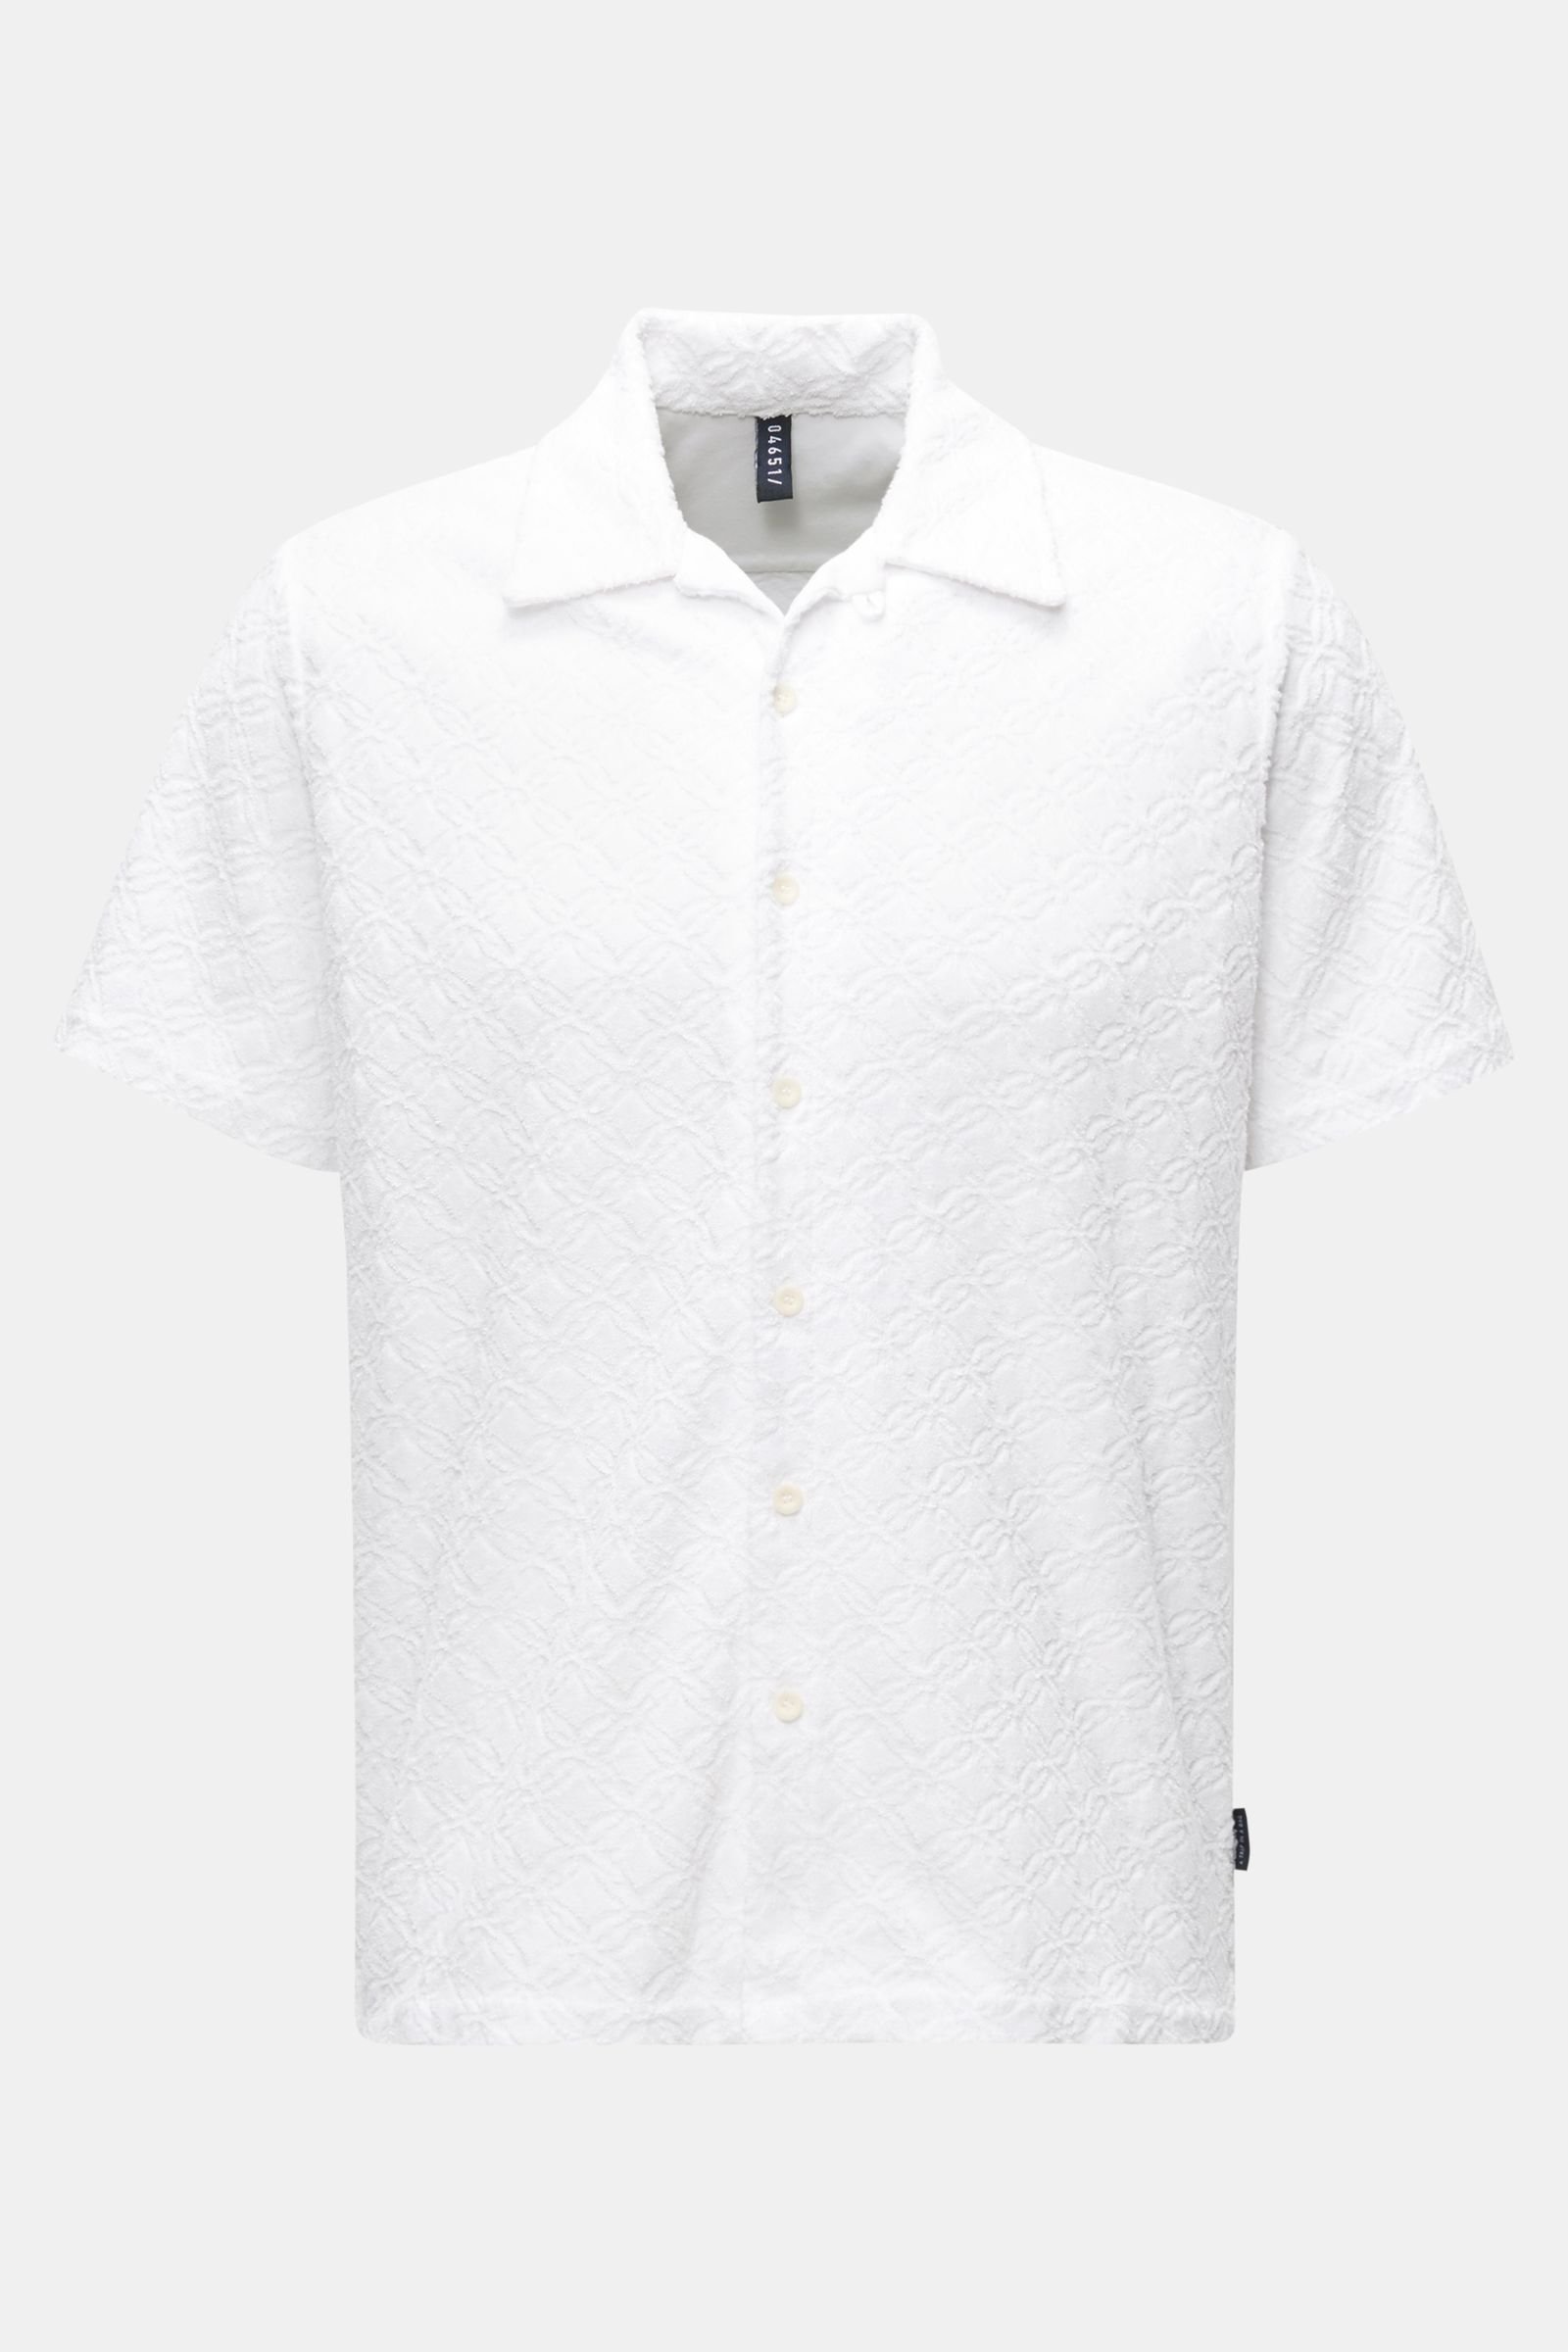 Terry short-sleeved shirt 'Terry Shirt' Kent collar white patterned